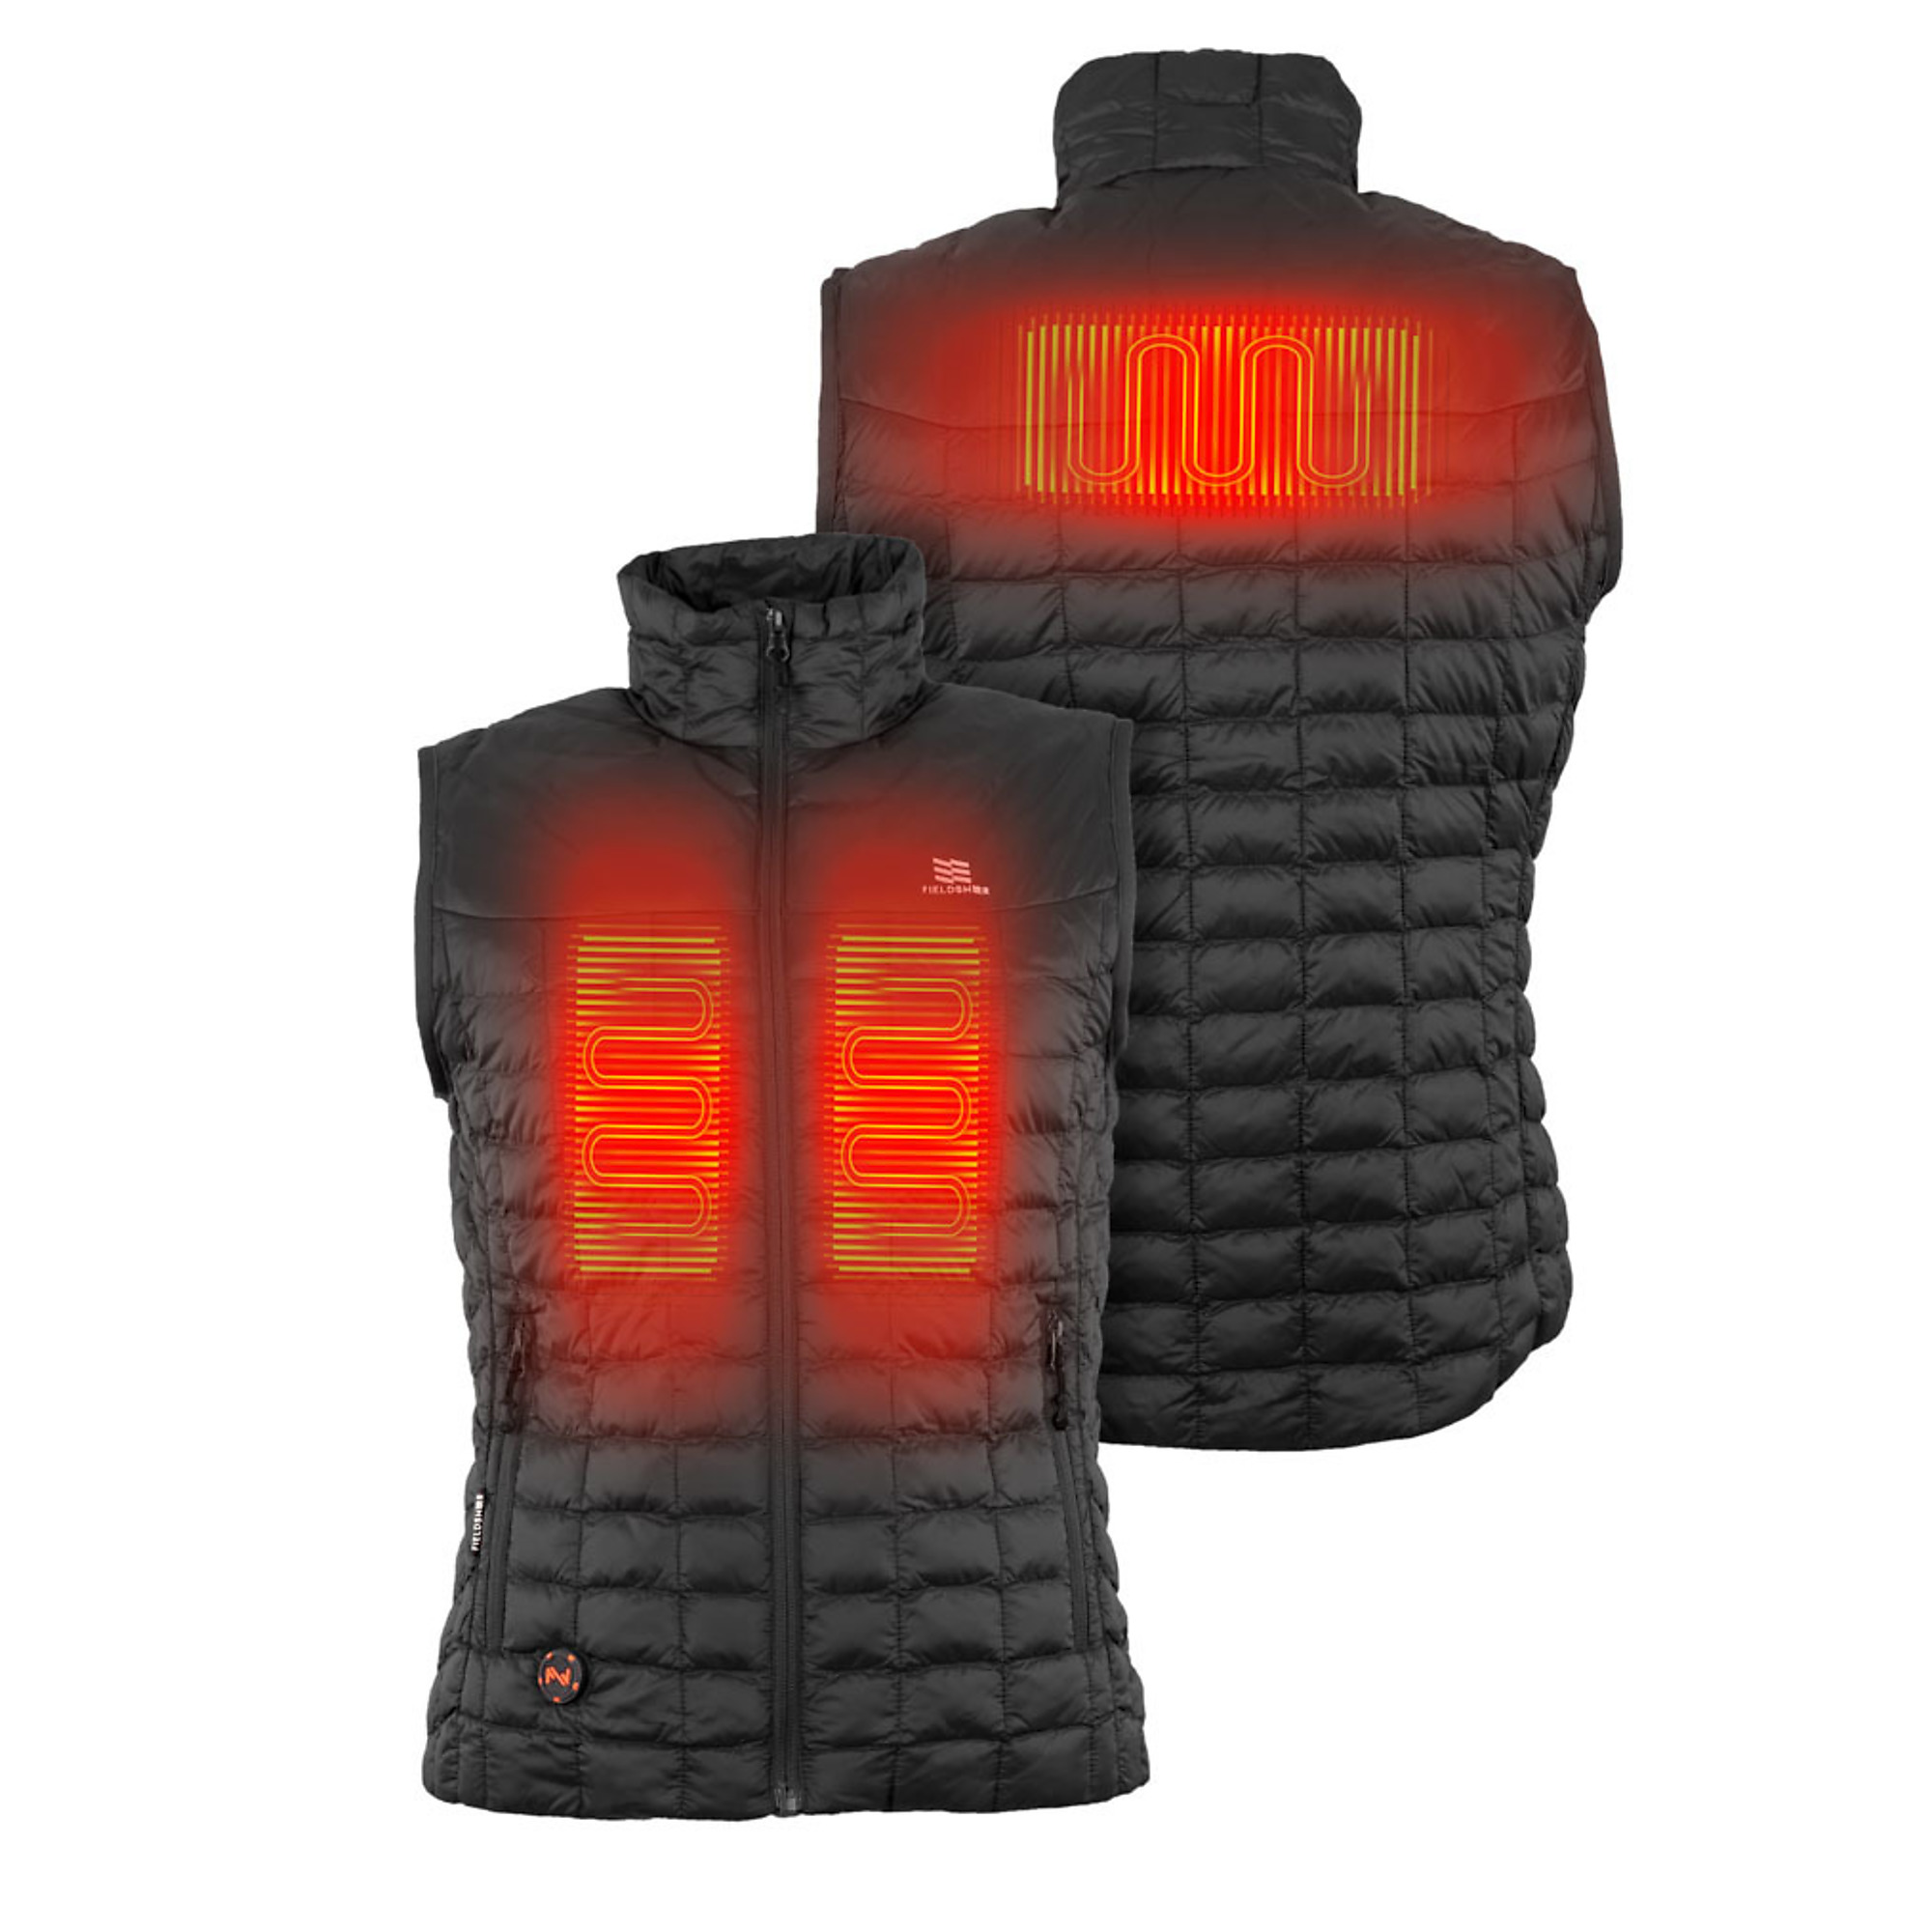 Fieldsheer, Women's 7.4v Backcountry Heated Vest, Size 2XL, Color Black, Model MWWV04010620